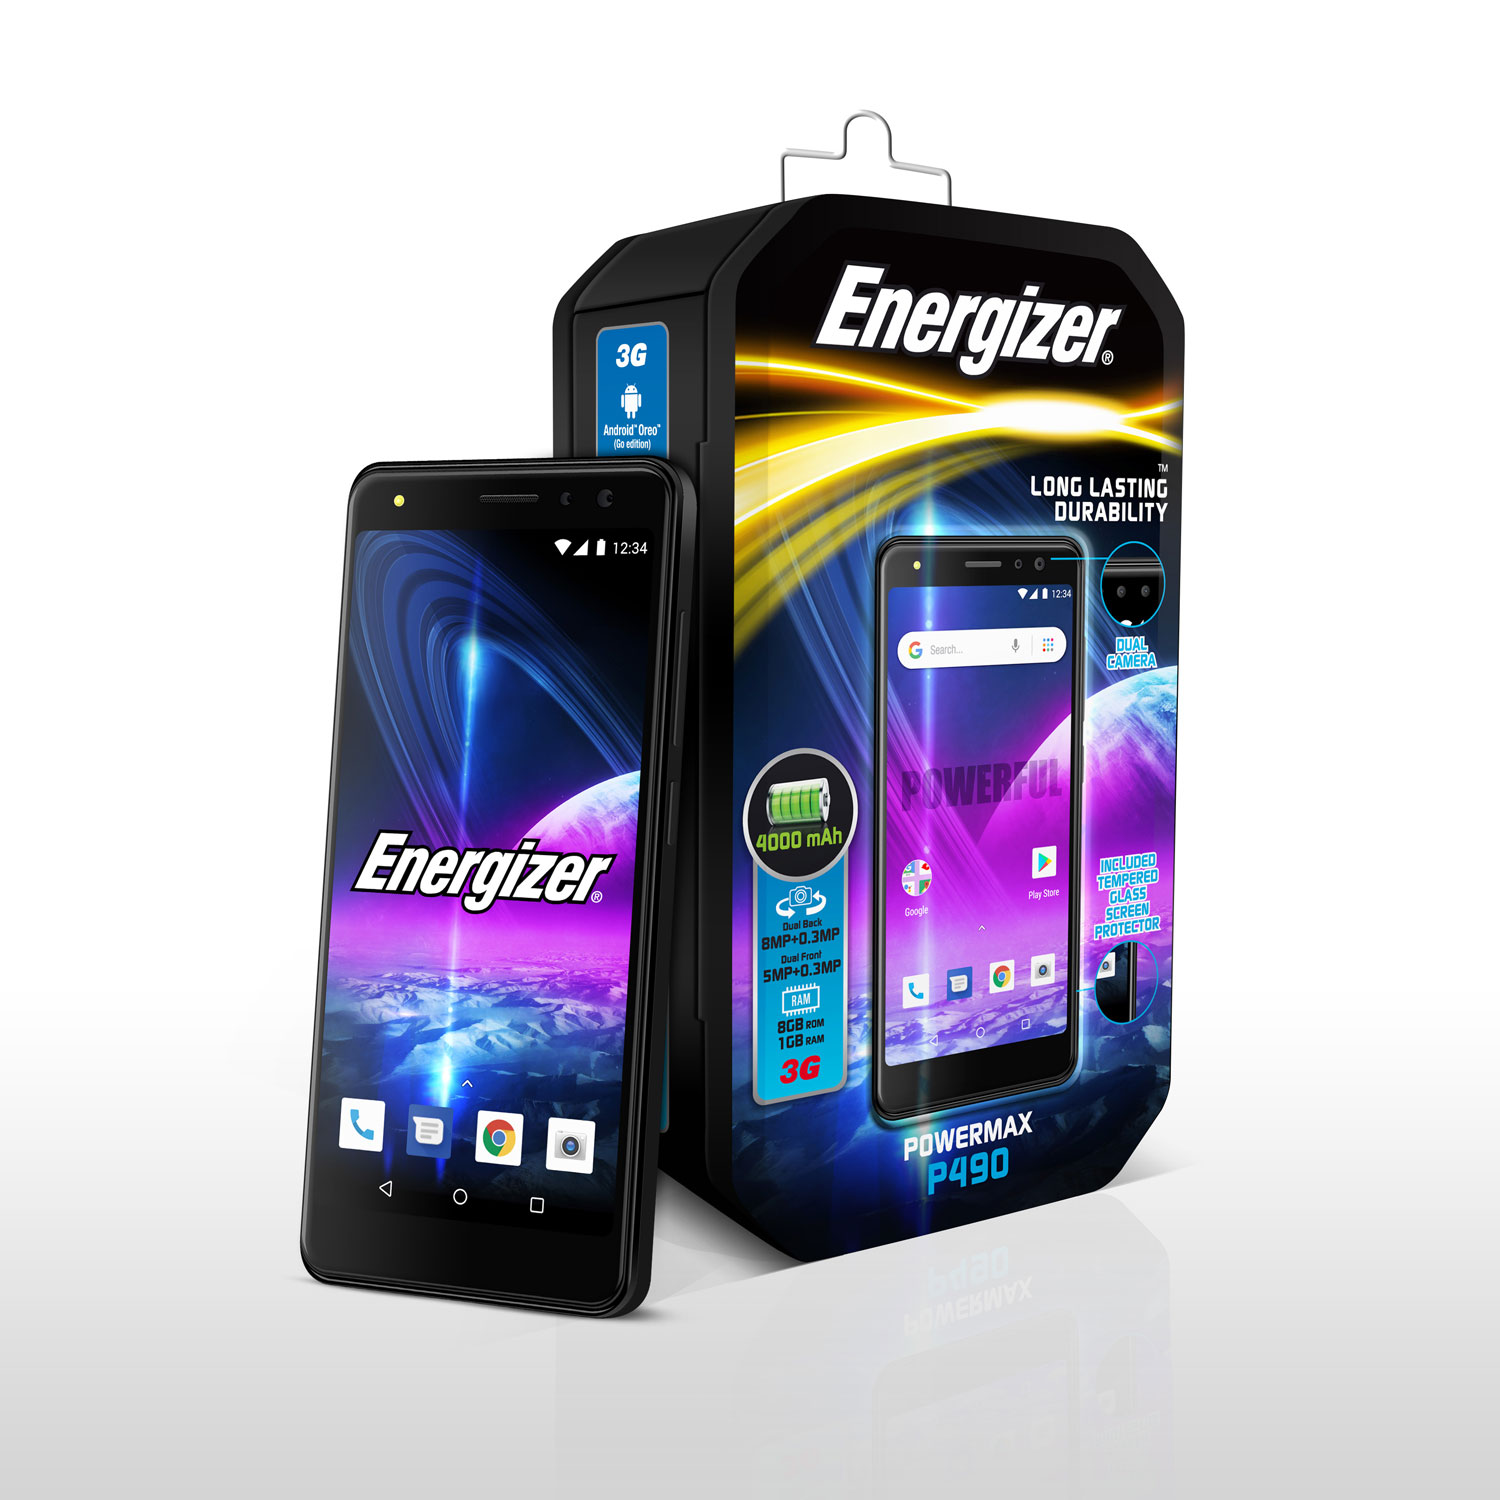 Energizer Power Max. Смартфон Energizer. Energizer телефон. Energizer Power и Max отличие.